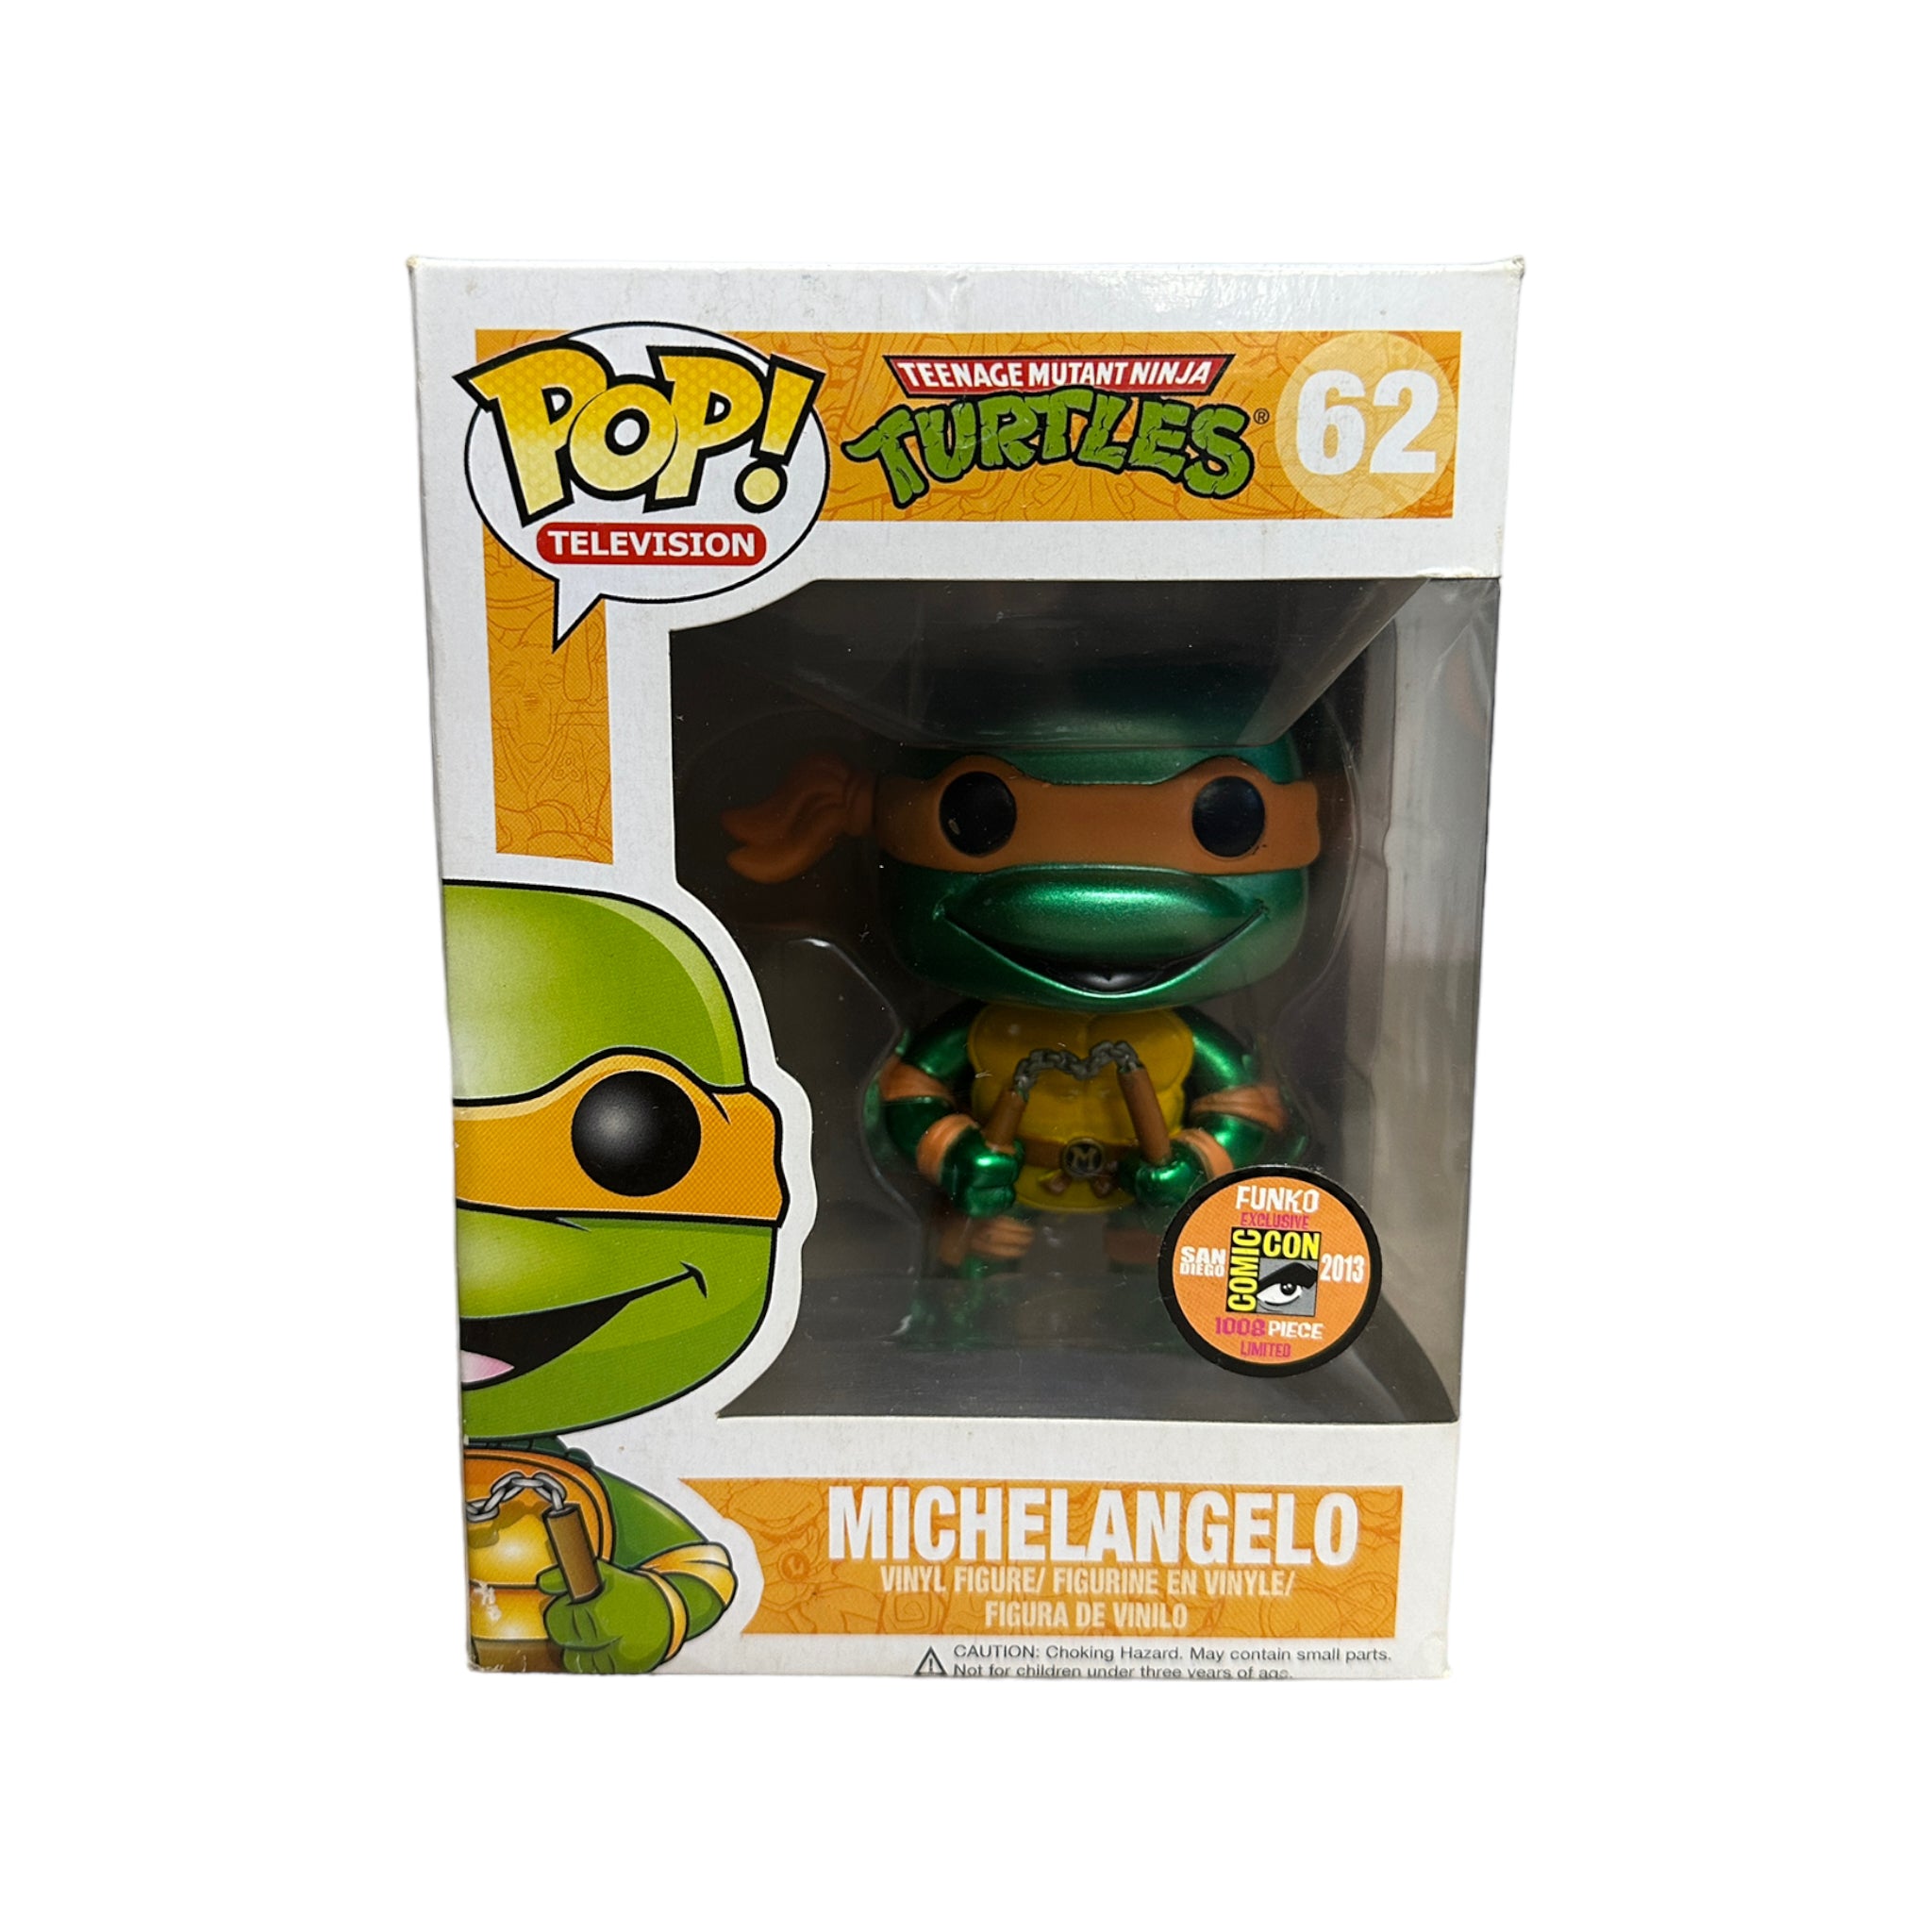 Michelangelo #62 (Metallic) Funko Pop! - Teenage Mutant Ninja Turtles - SDCC 2013 Exclusive LE1008 Pcs - Condition 6.5/10